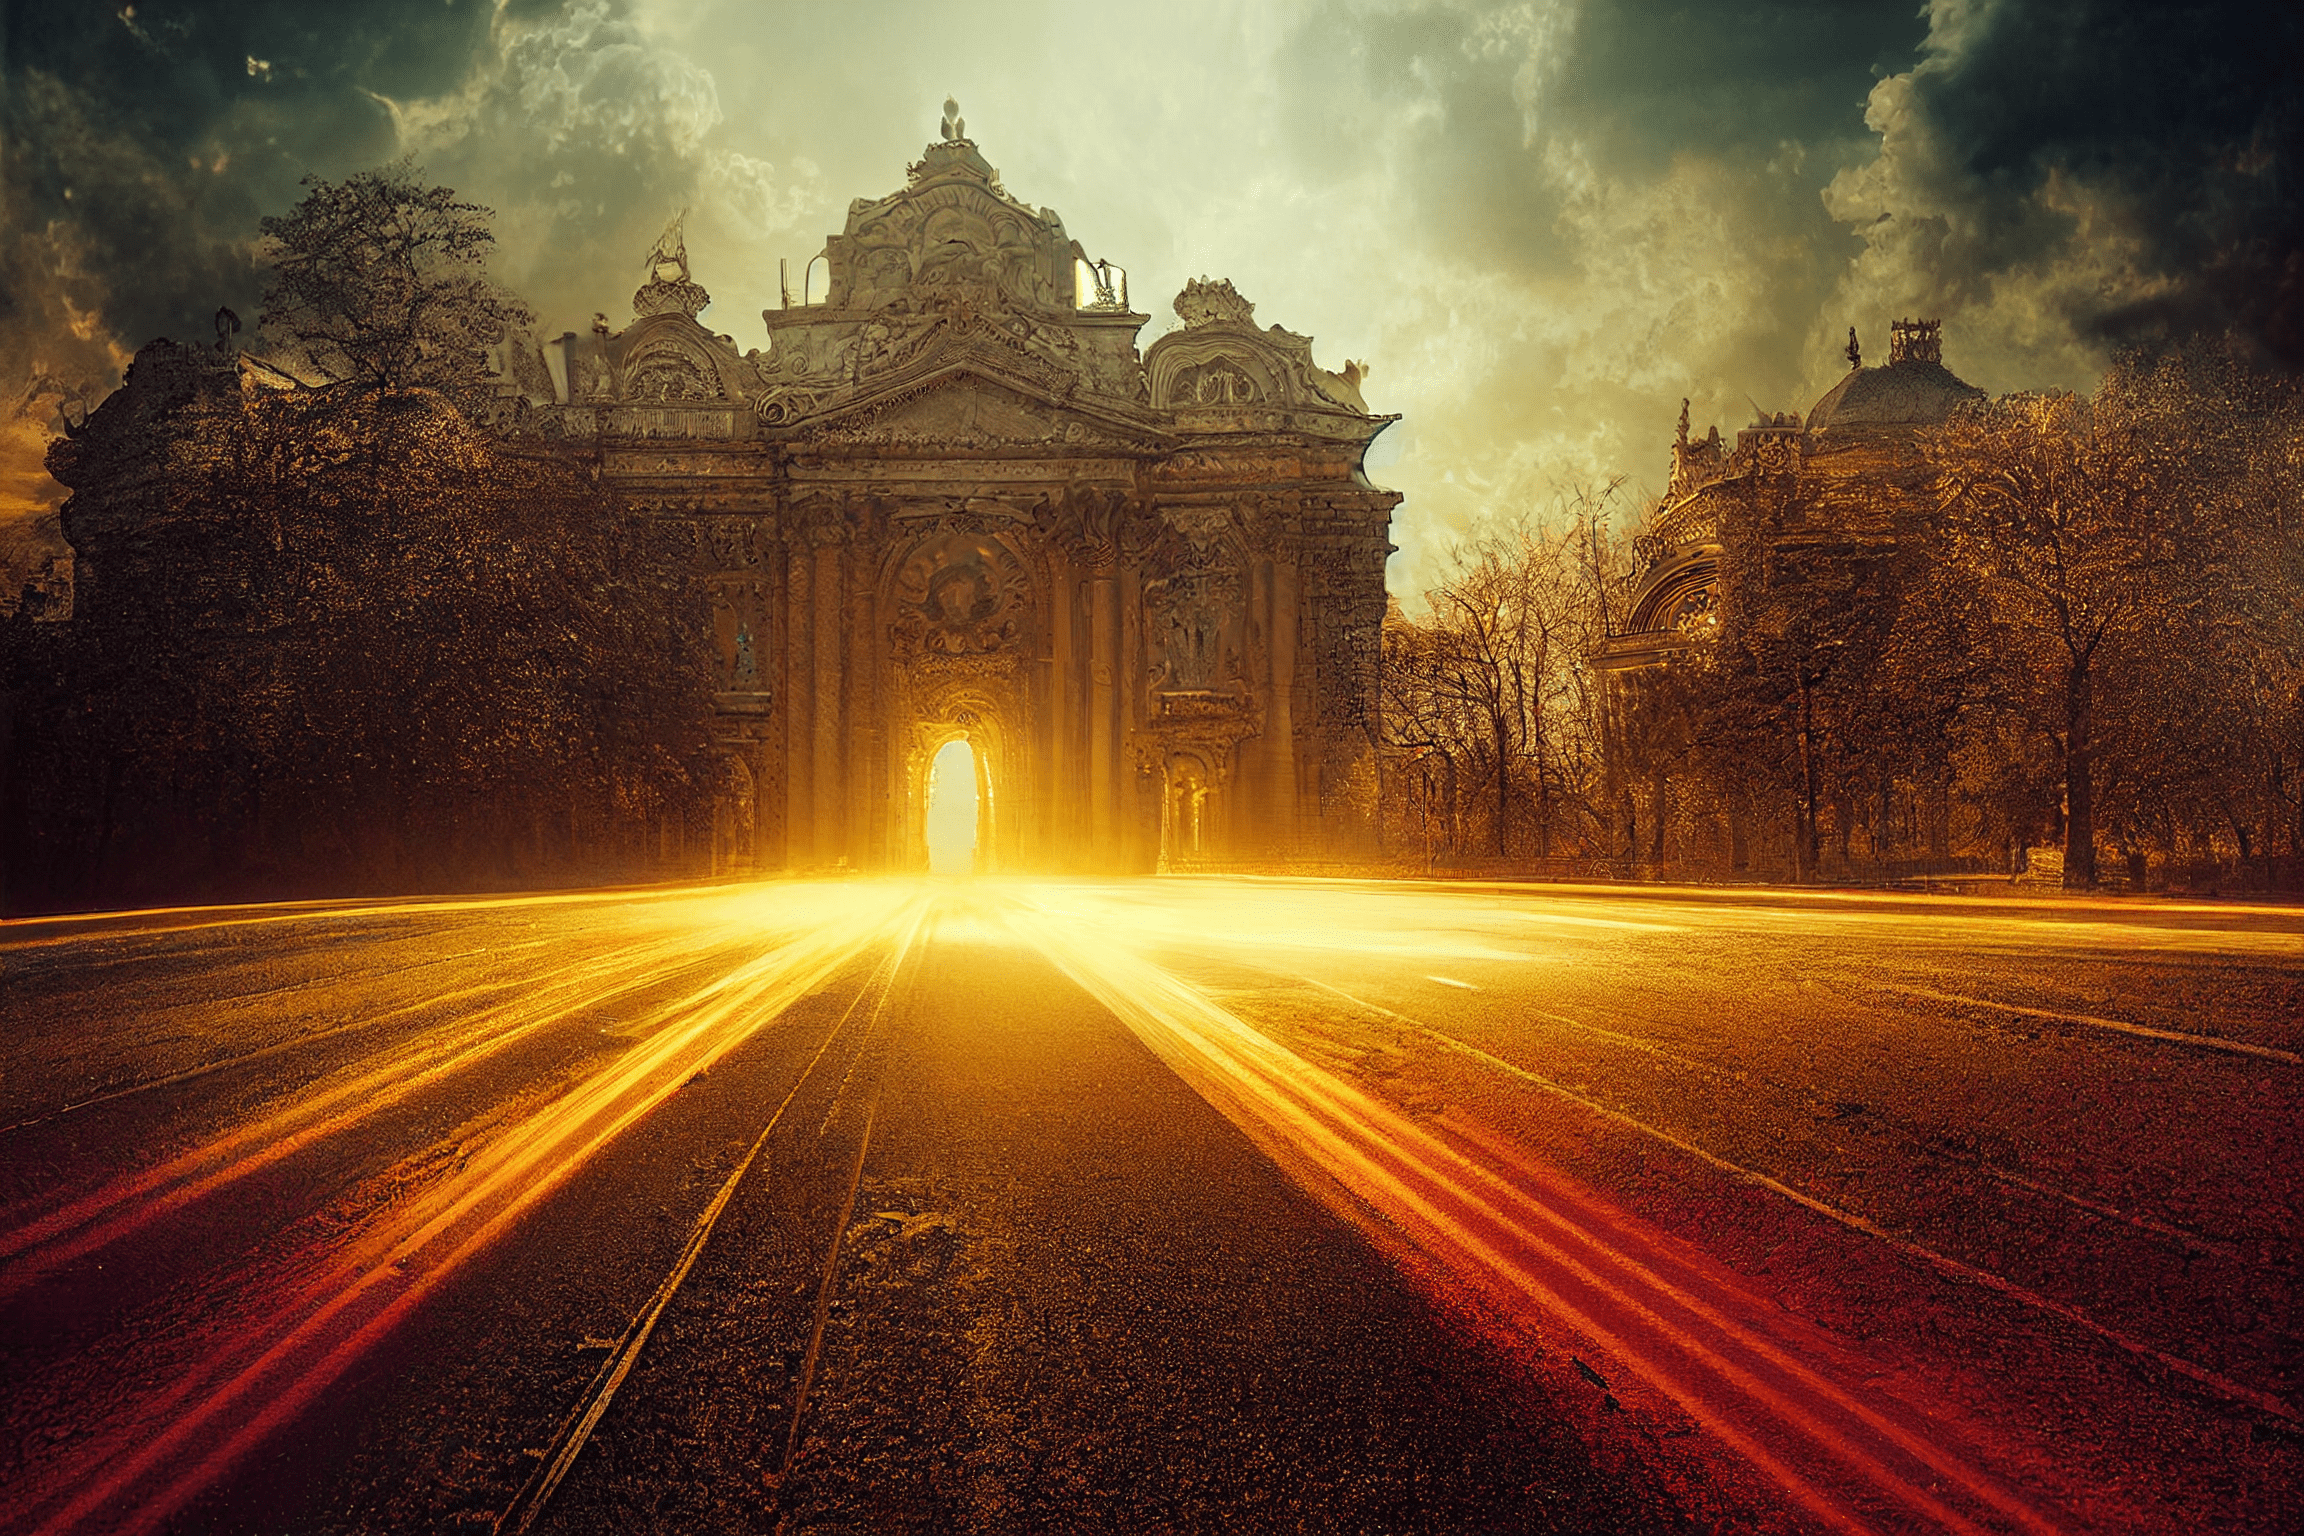 Way back a year ago – Baroque portal of light